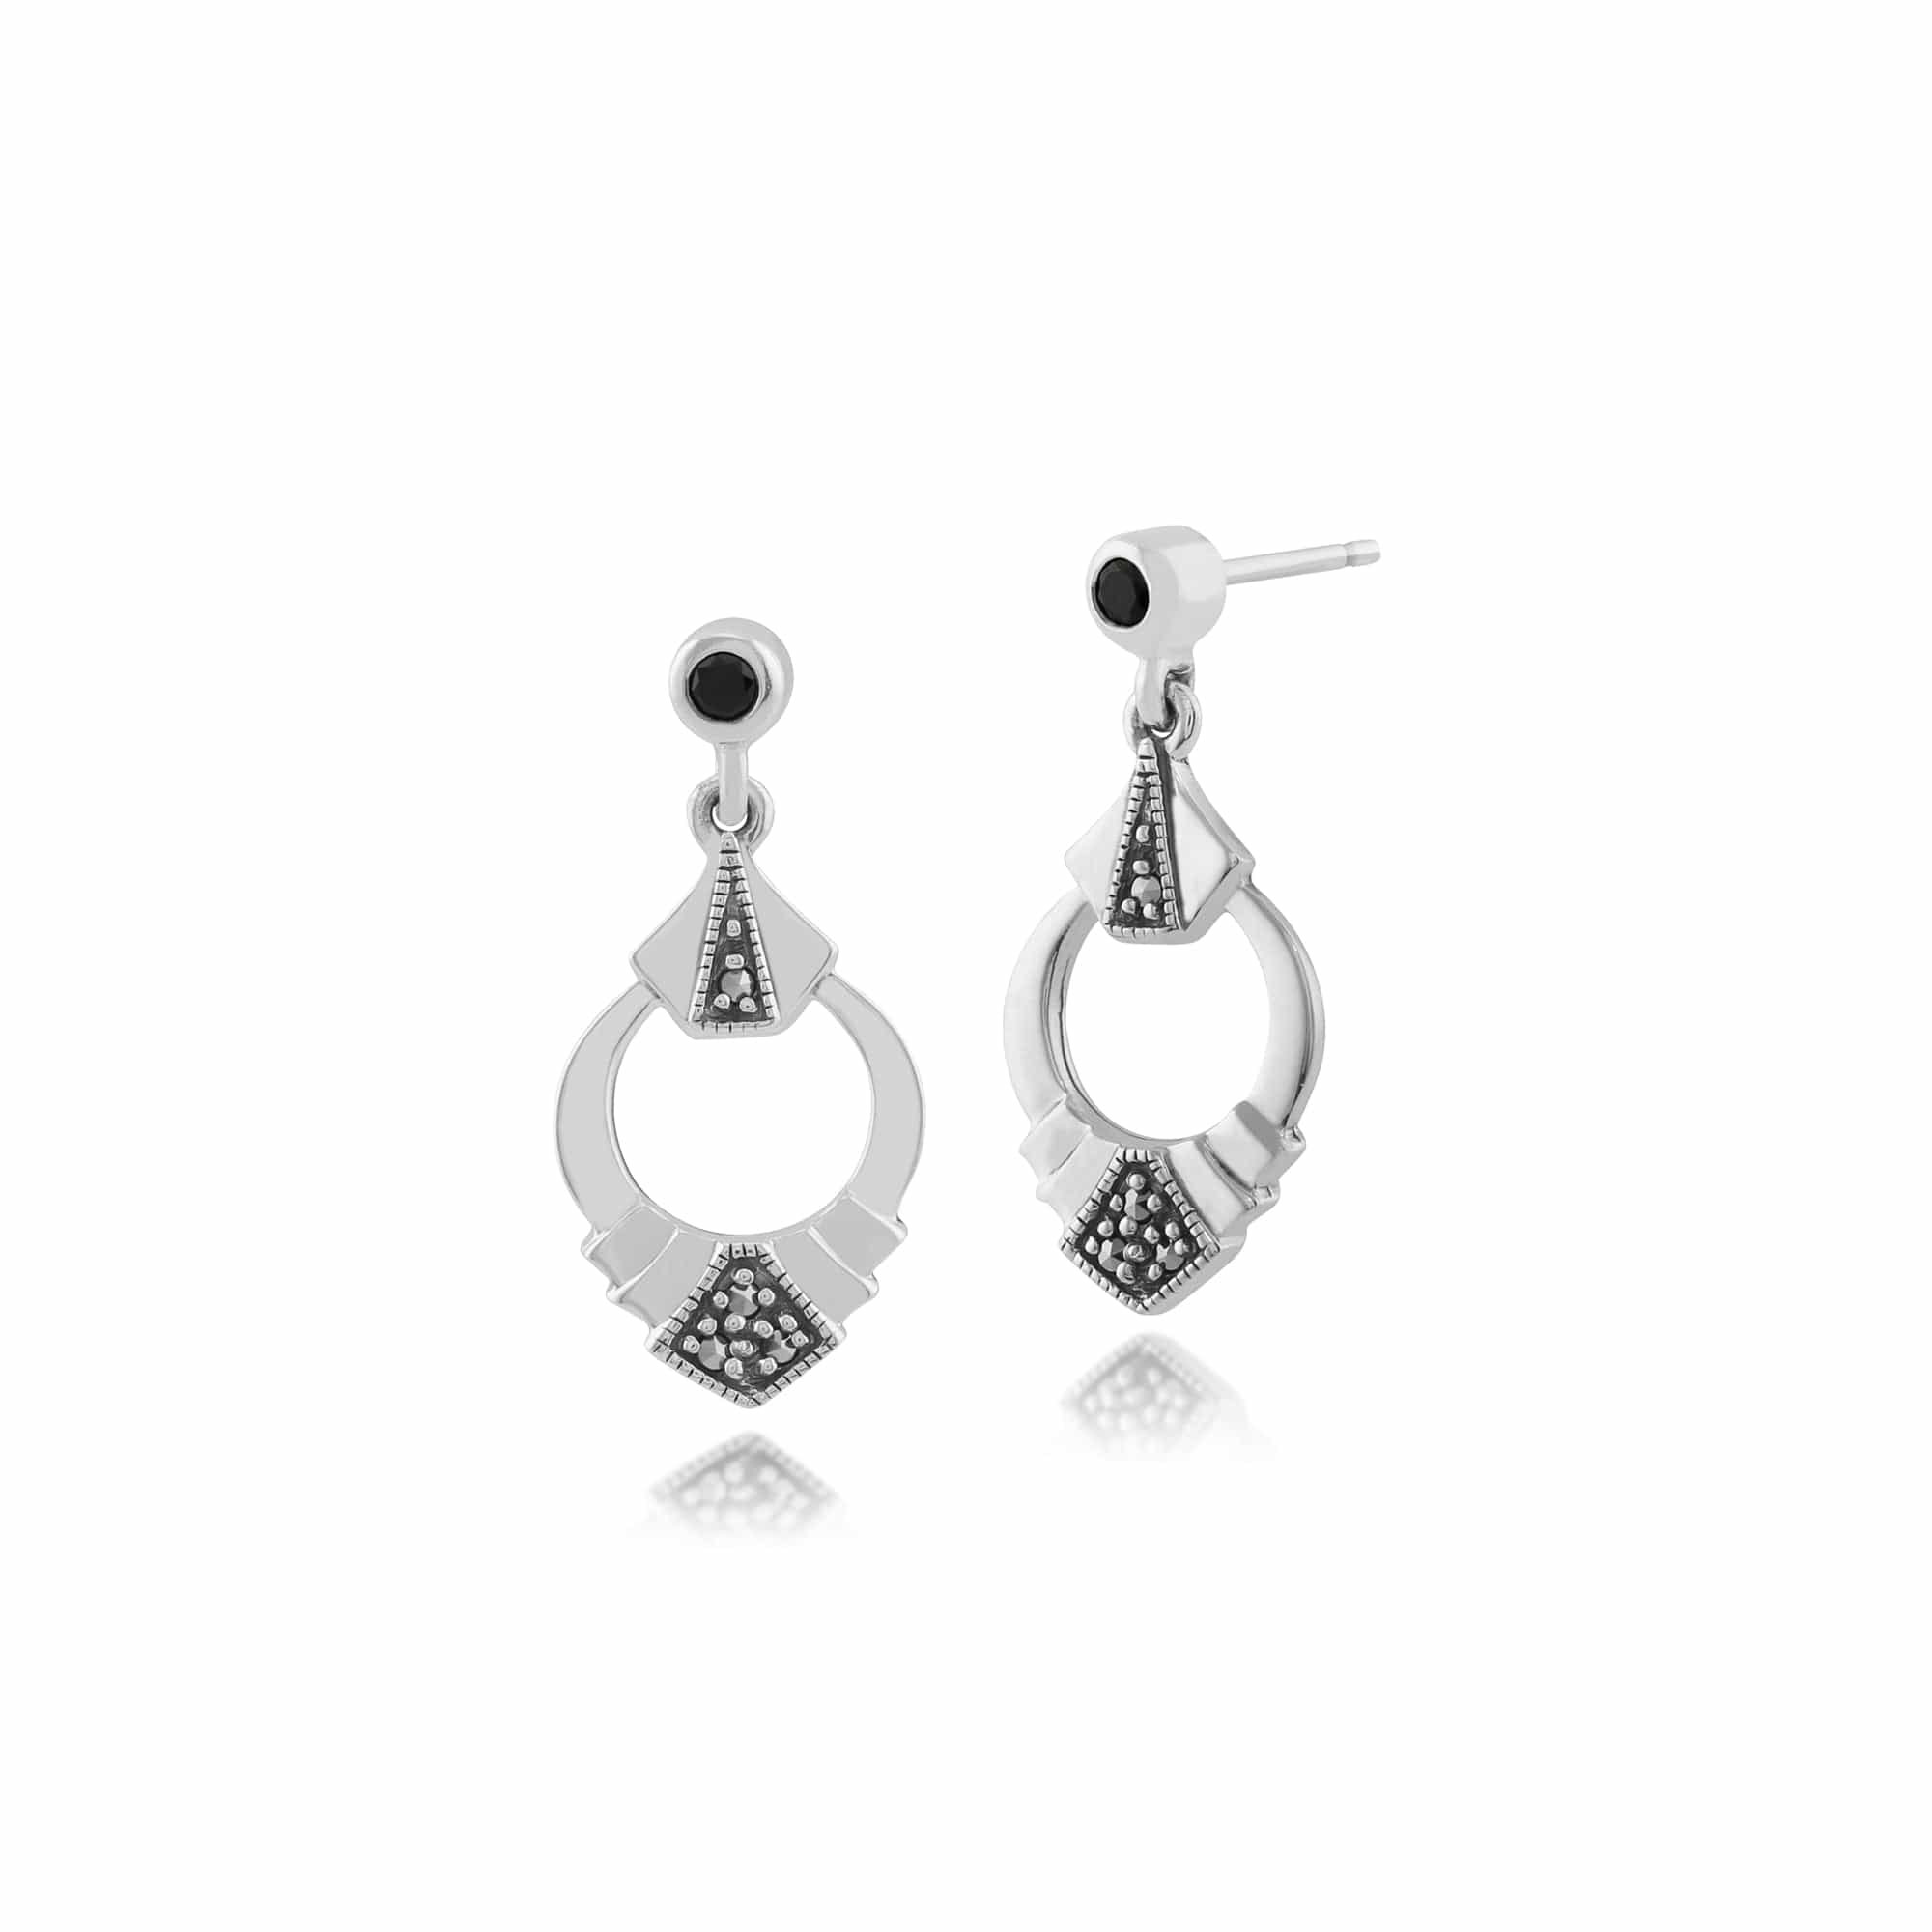 Art Deco Style Black Spinel & Marcasite Ring Drop Earrings in 925 Sterling Silver - Gemondo